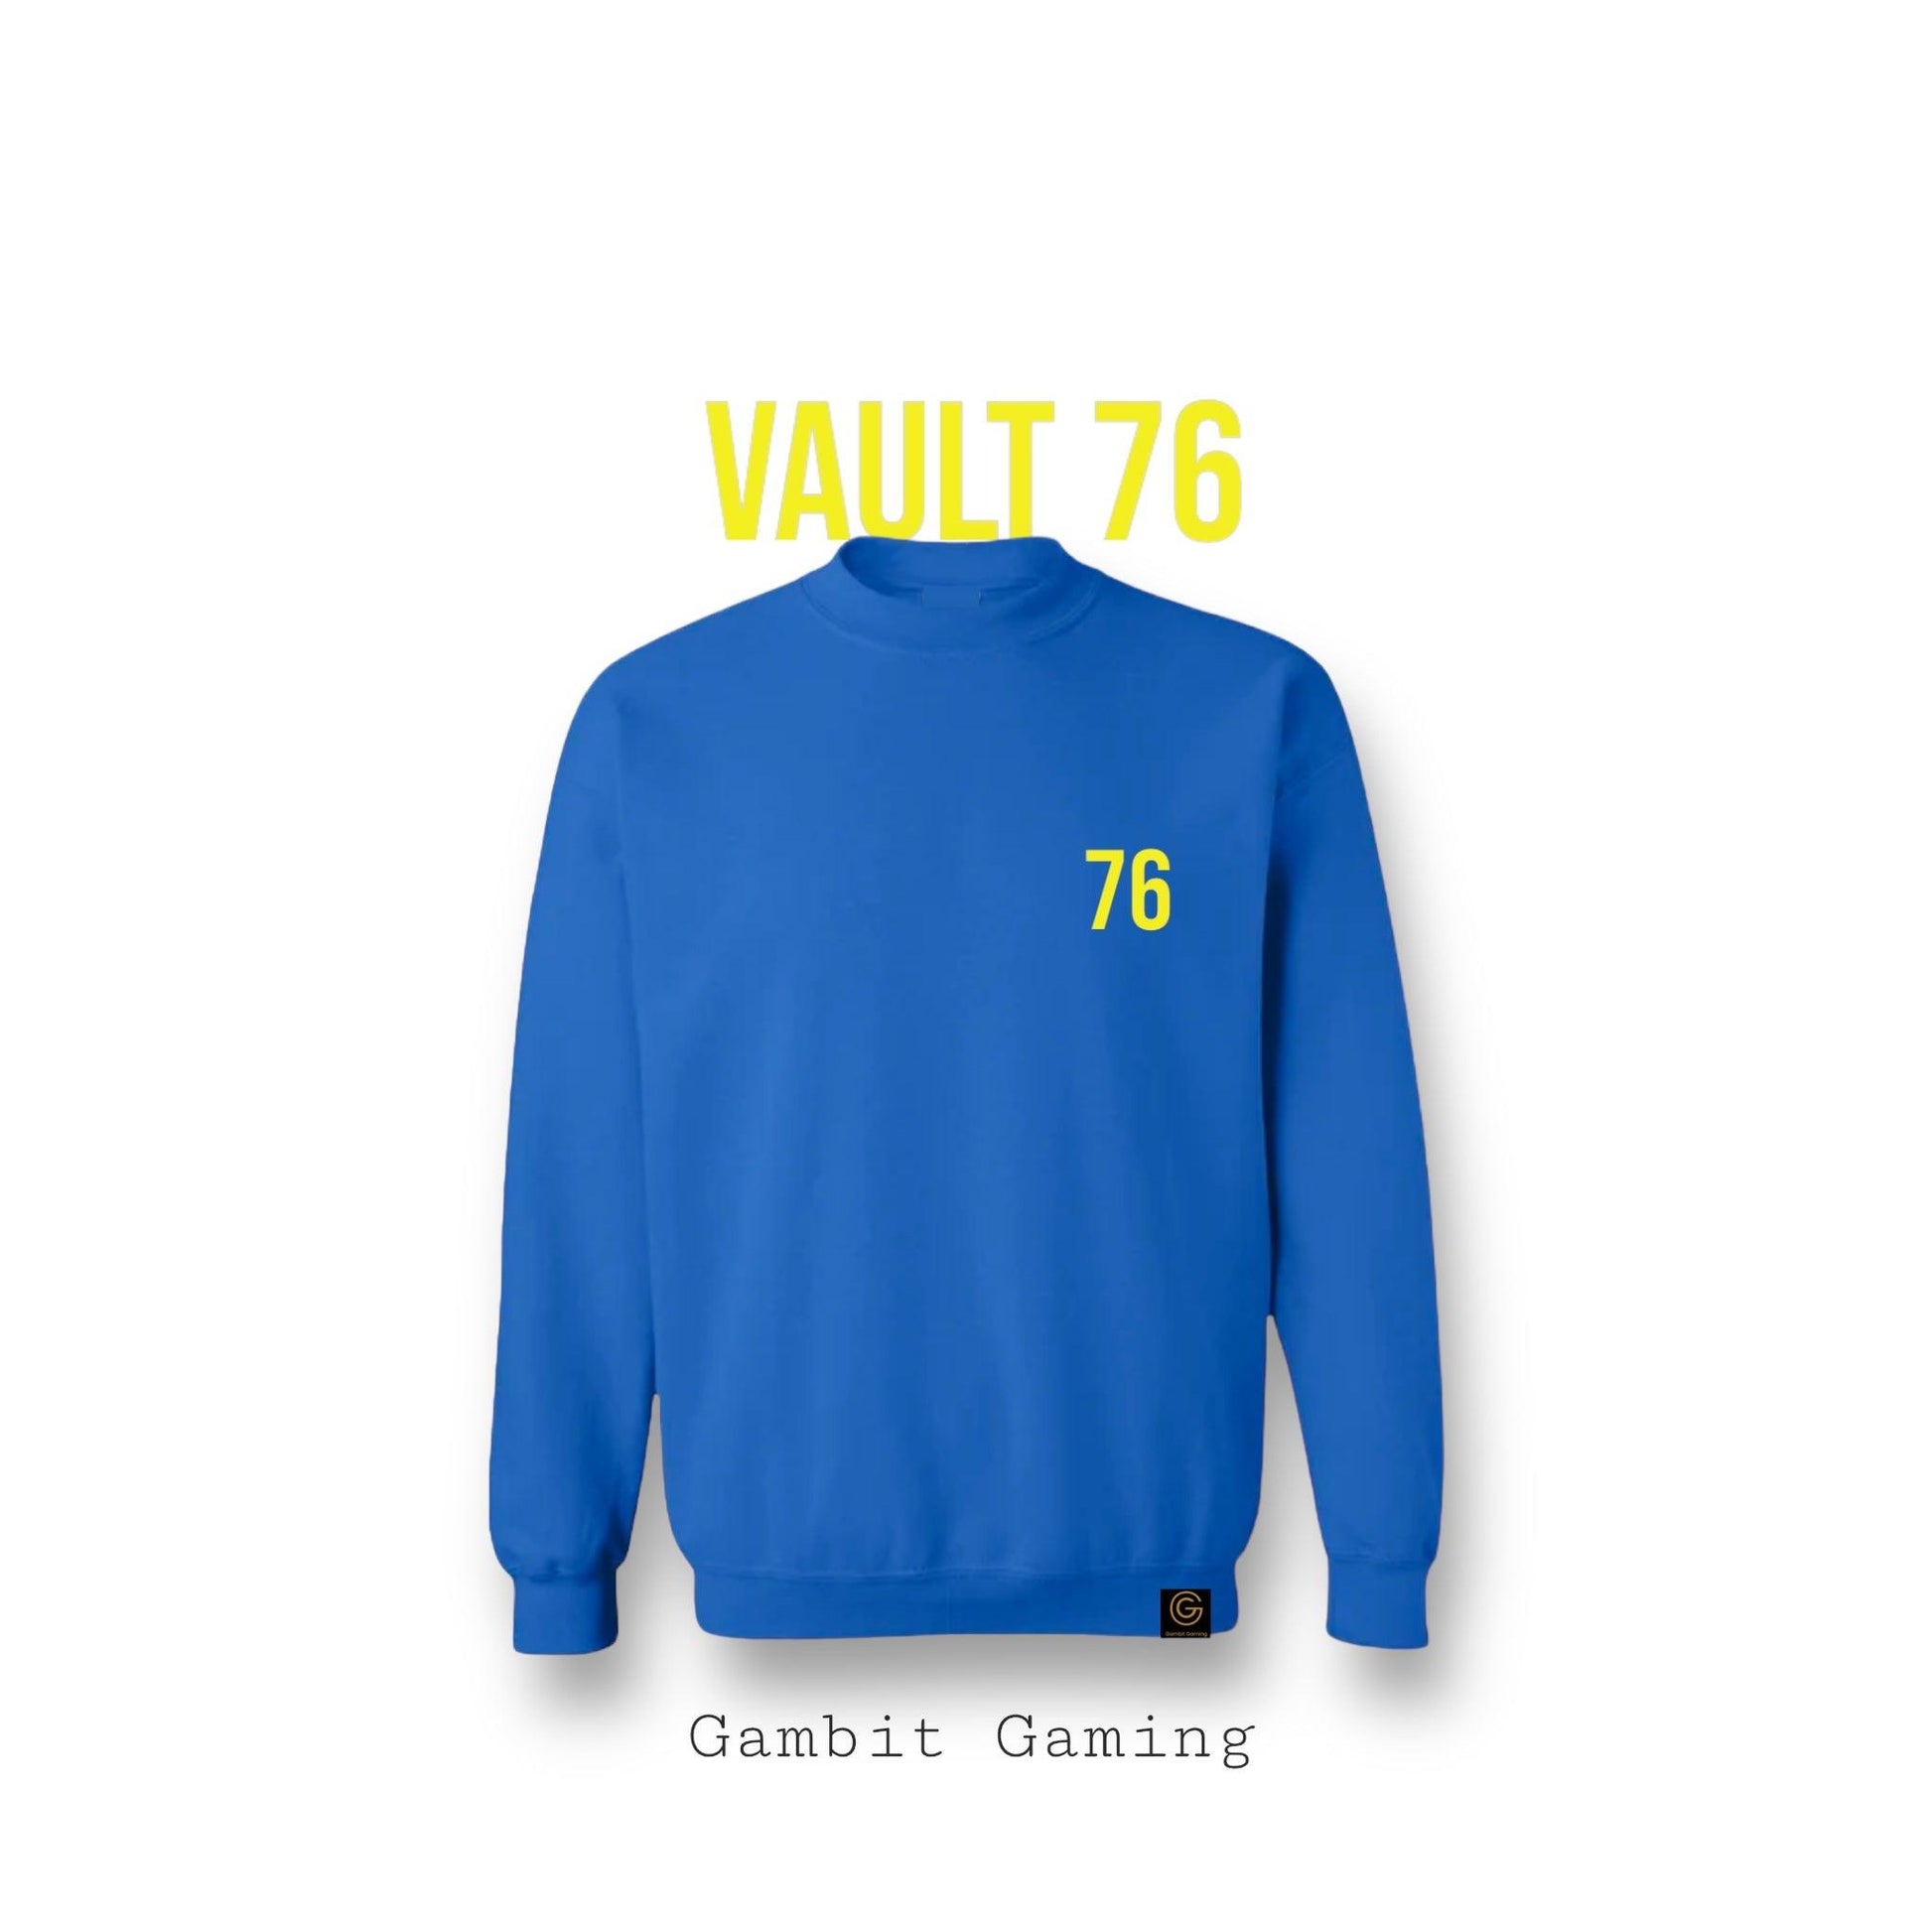 Vault 76 Sweater - Gambit Gaming